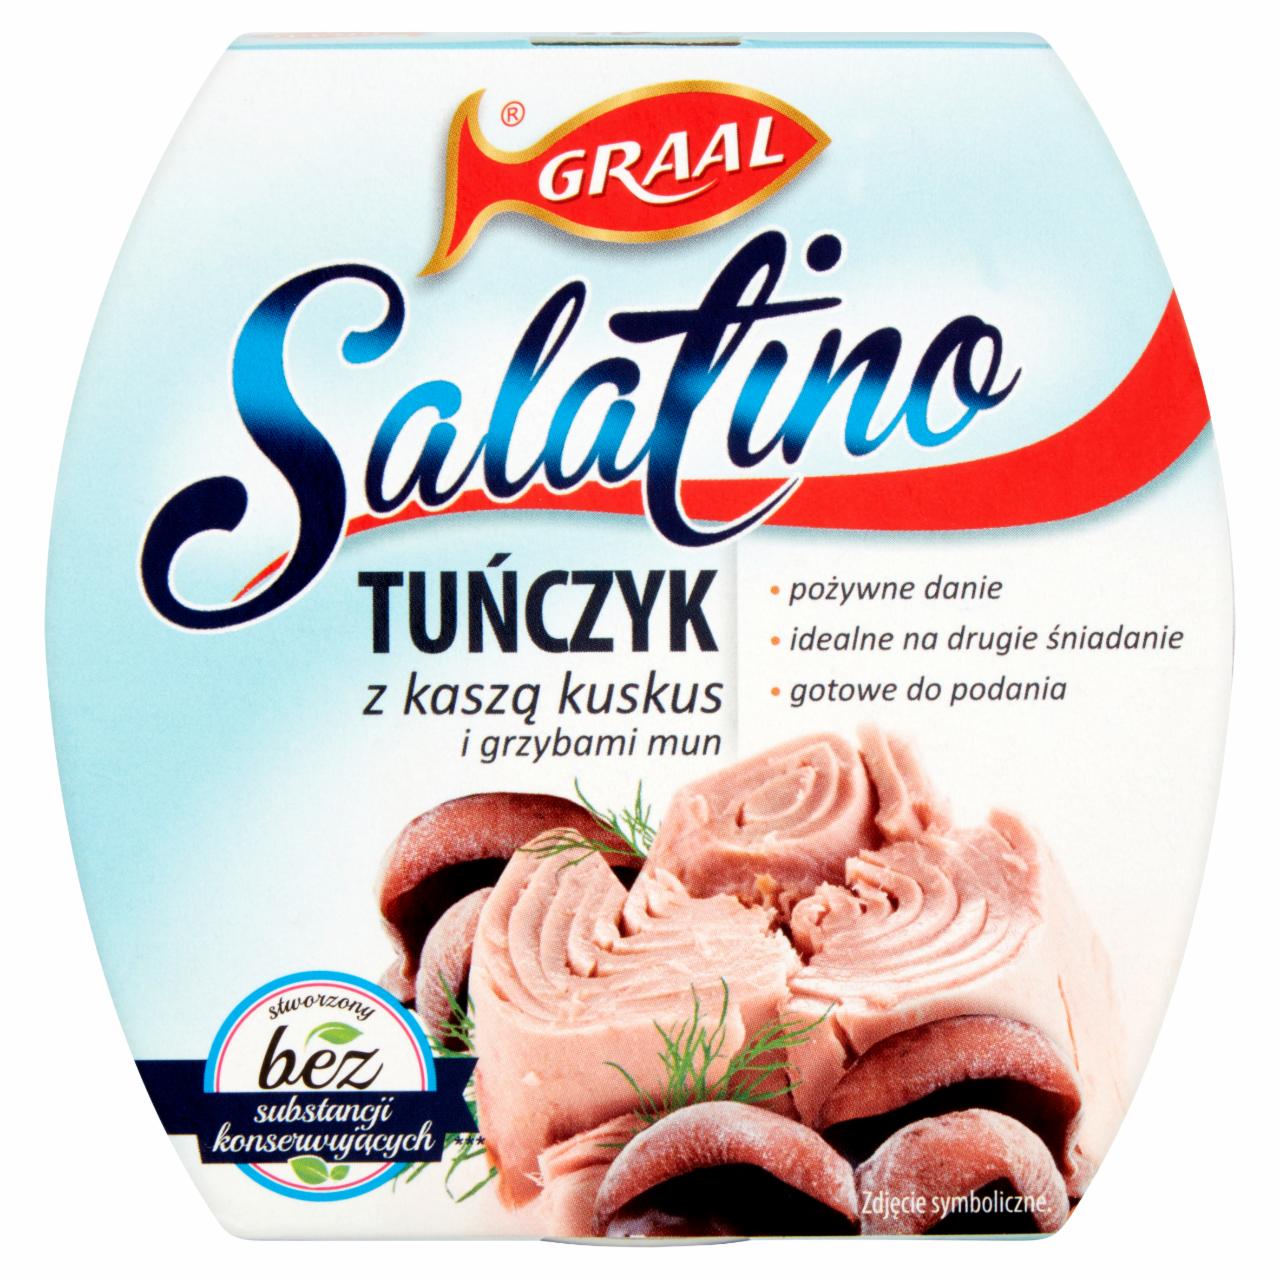 Photo - GRAAL Salatino Tuna with Couscous and Mun Mushrooms 160 g